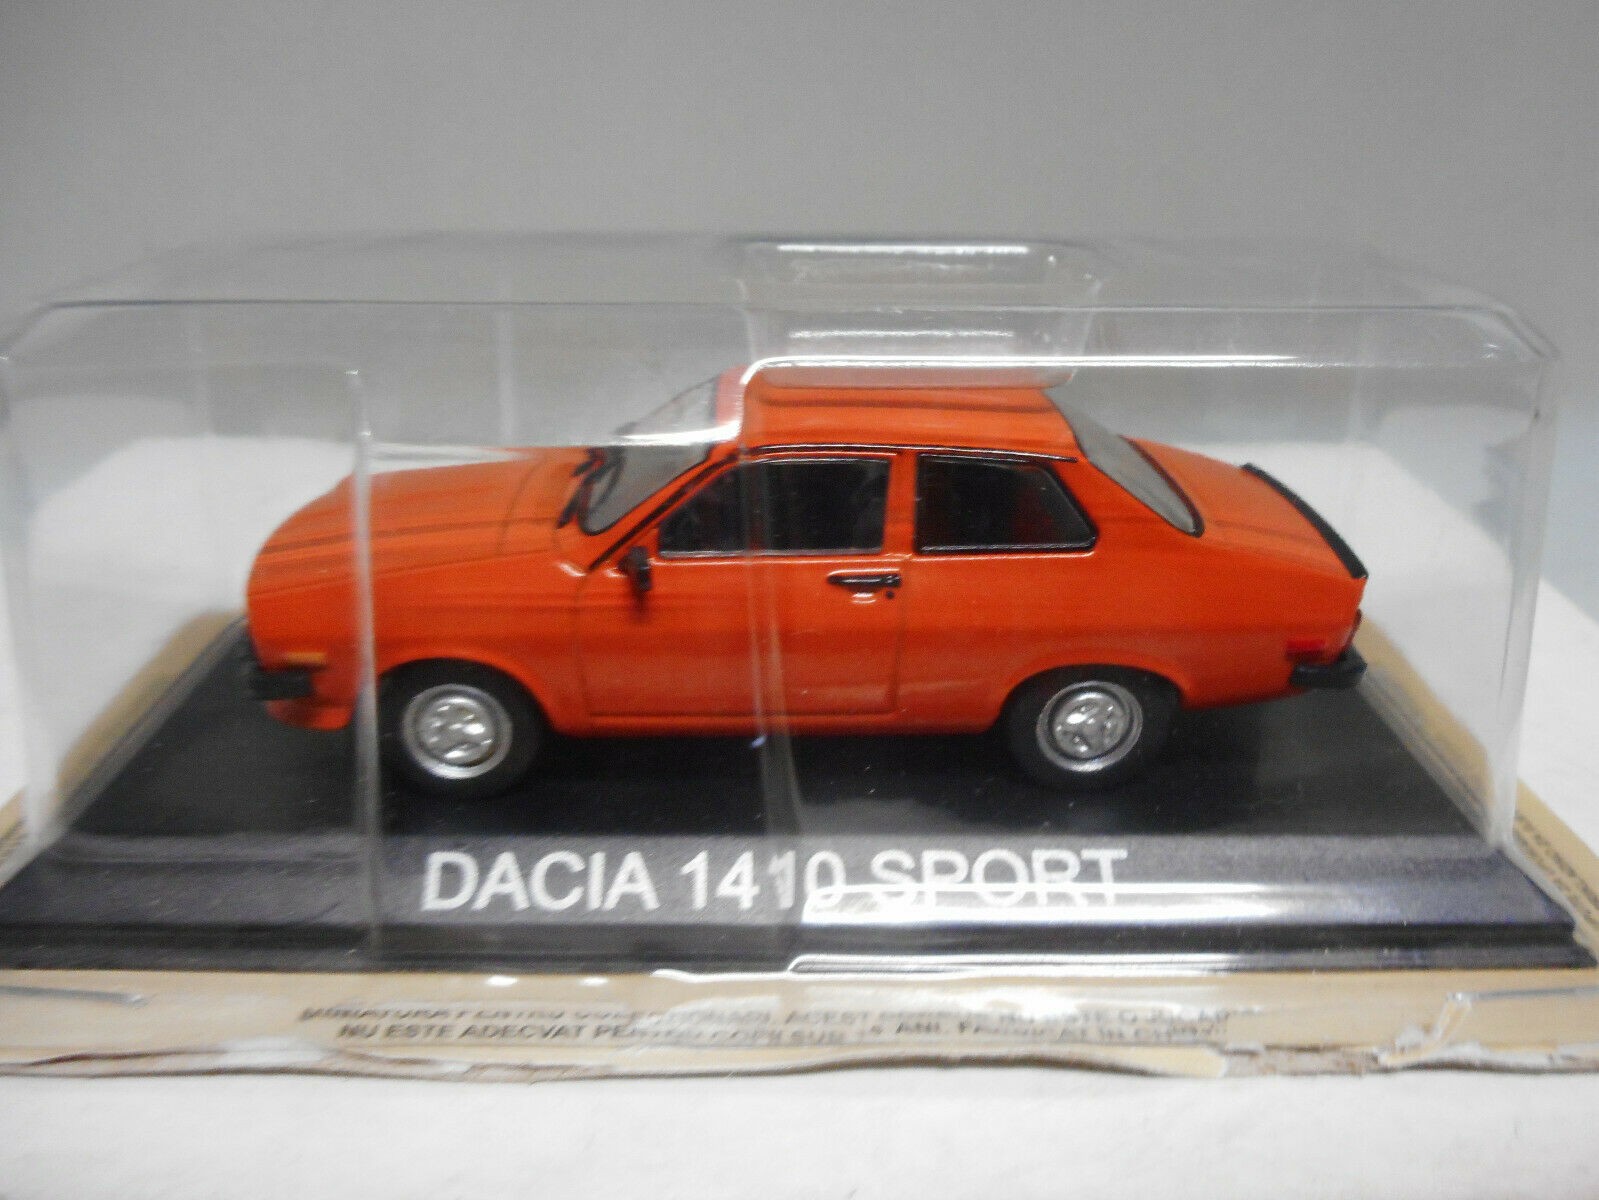 DIE-CAST IXO/IST Dacia 1410 Sport De Agostini 1:43 1/43 